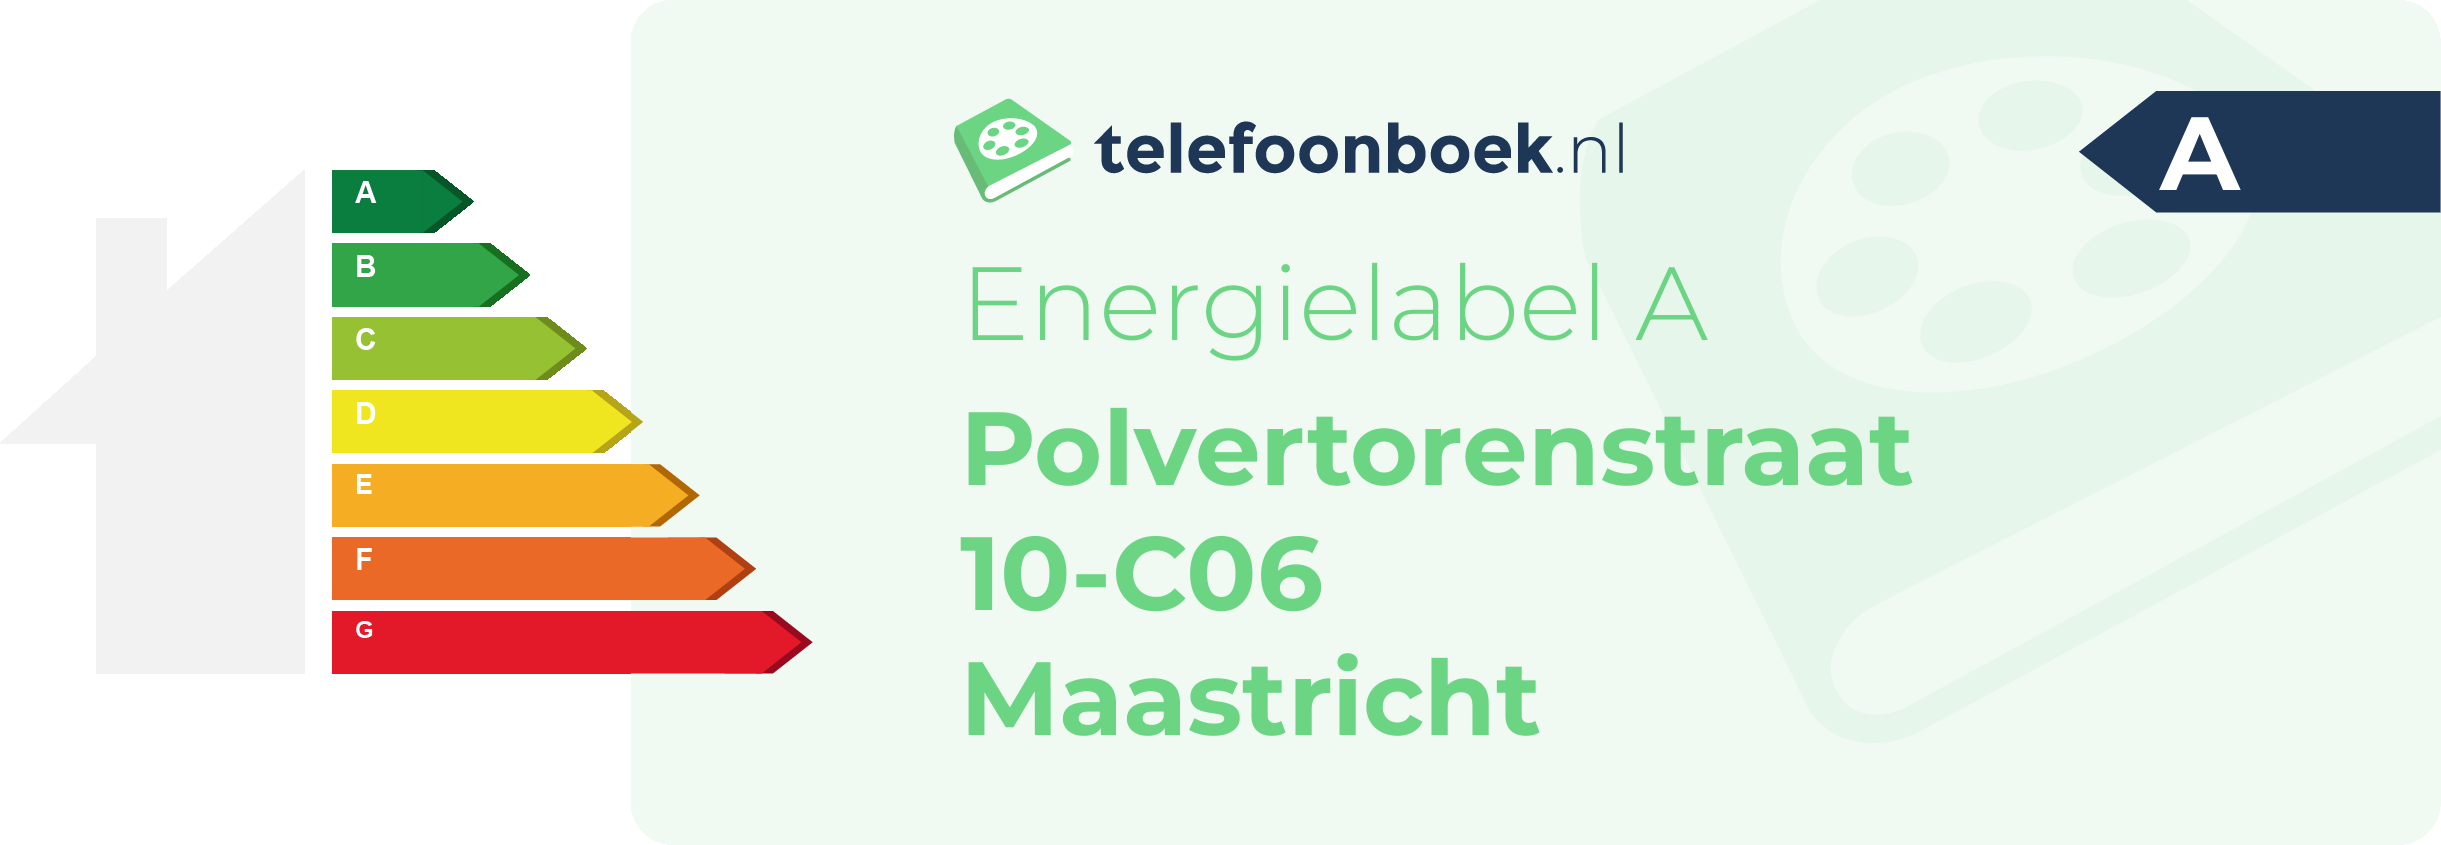 Energielabel Polvertorenstraat 10-C06 Maastricht